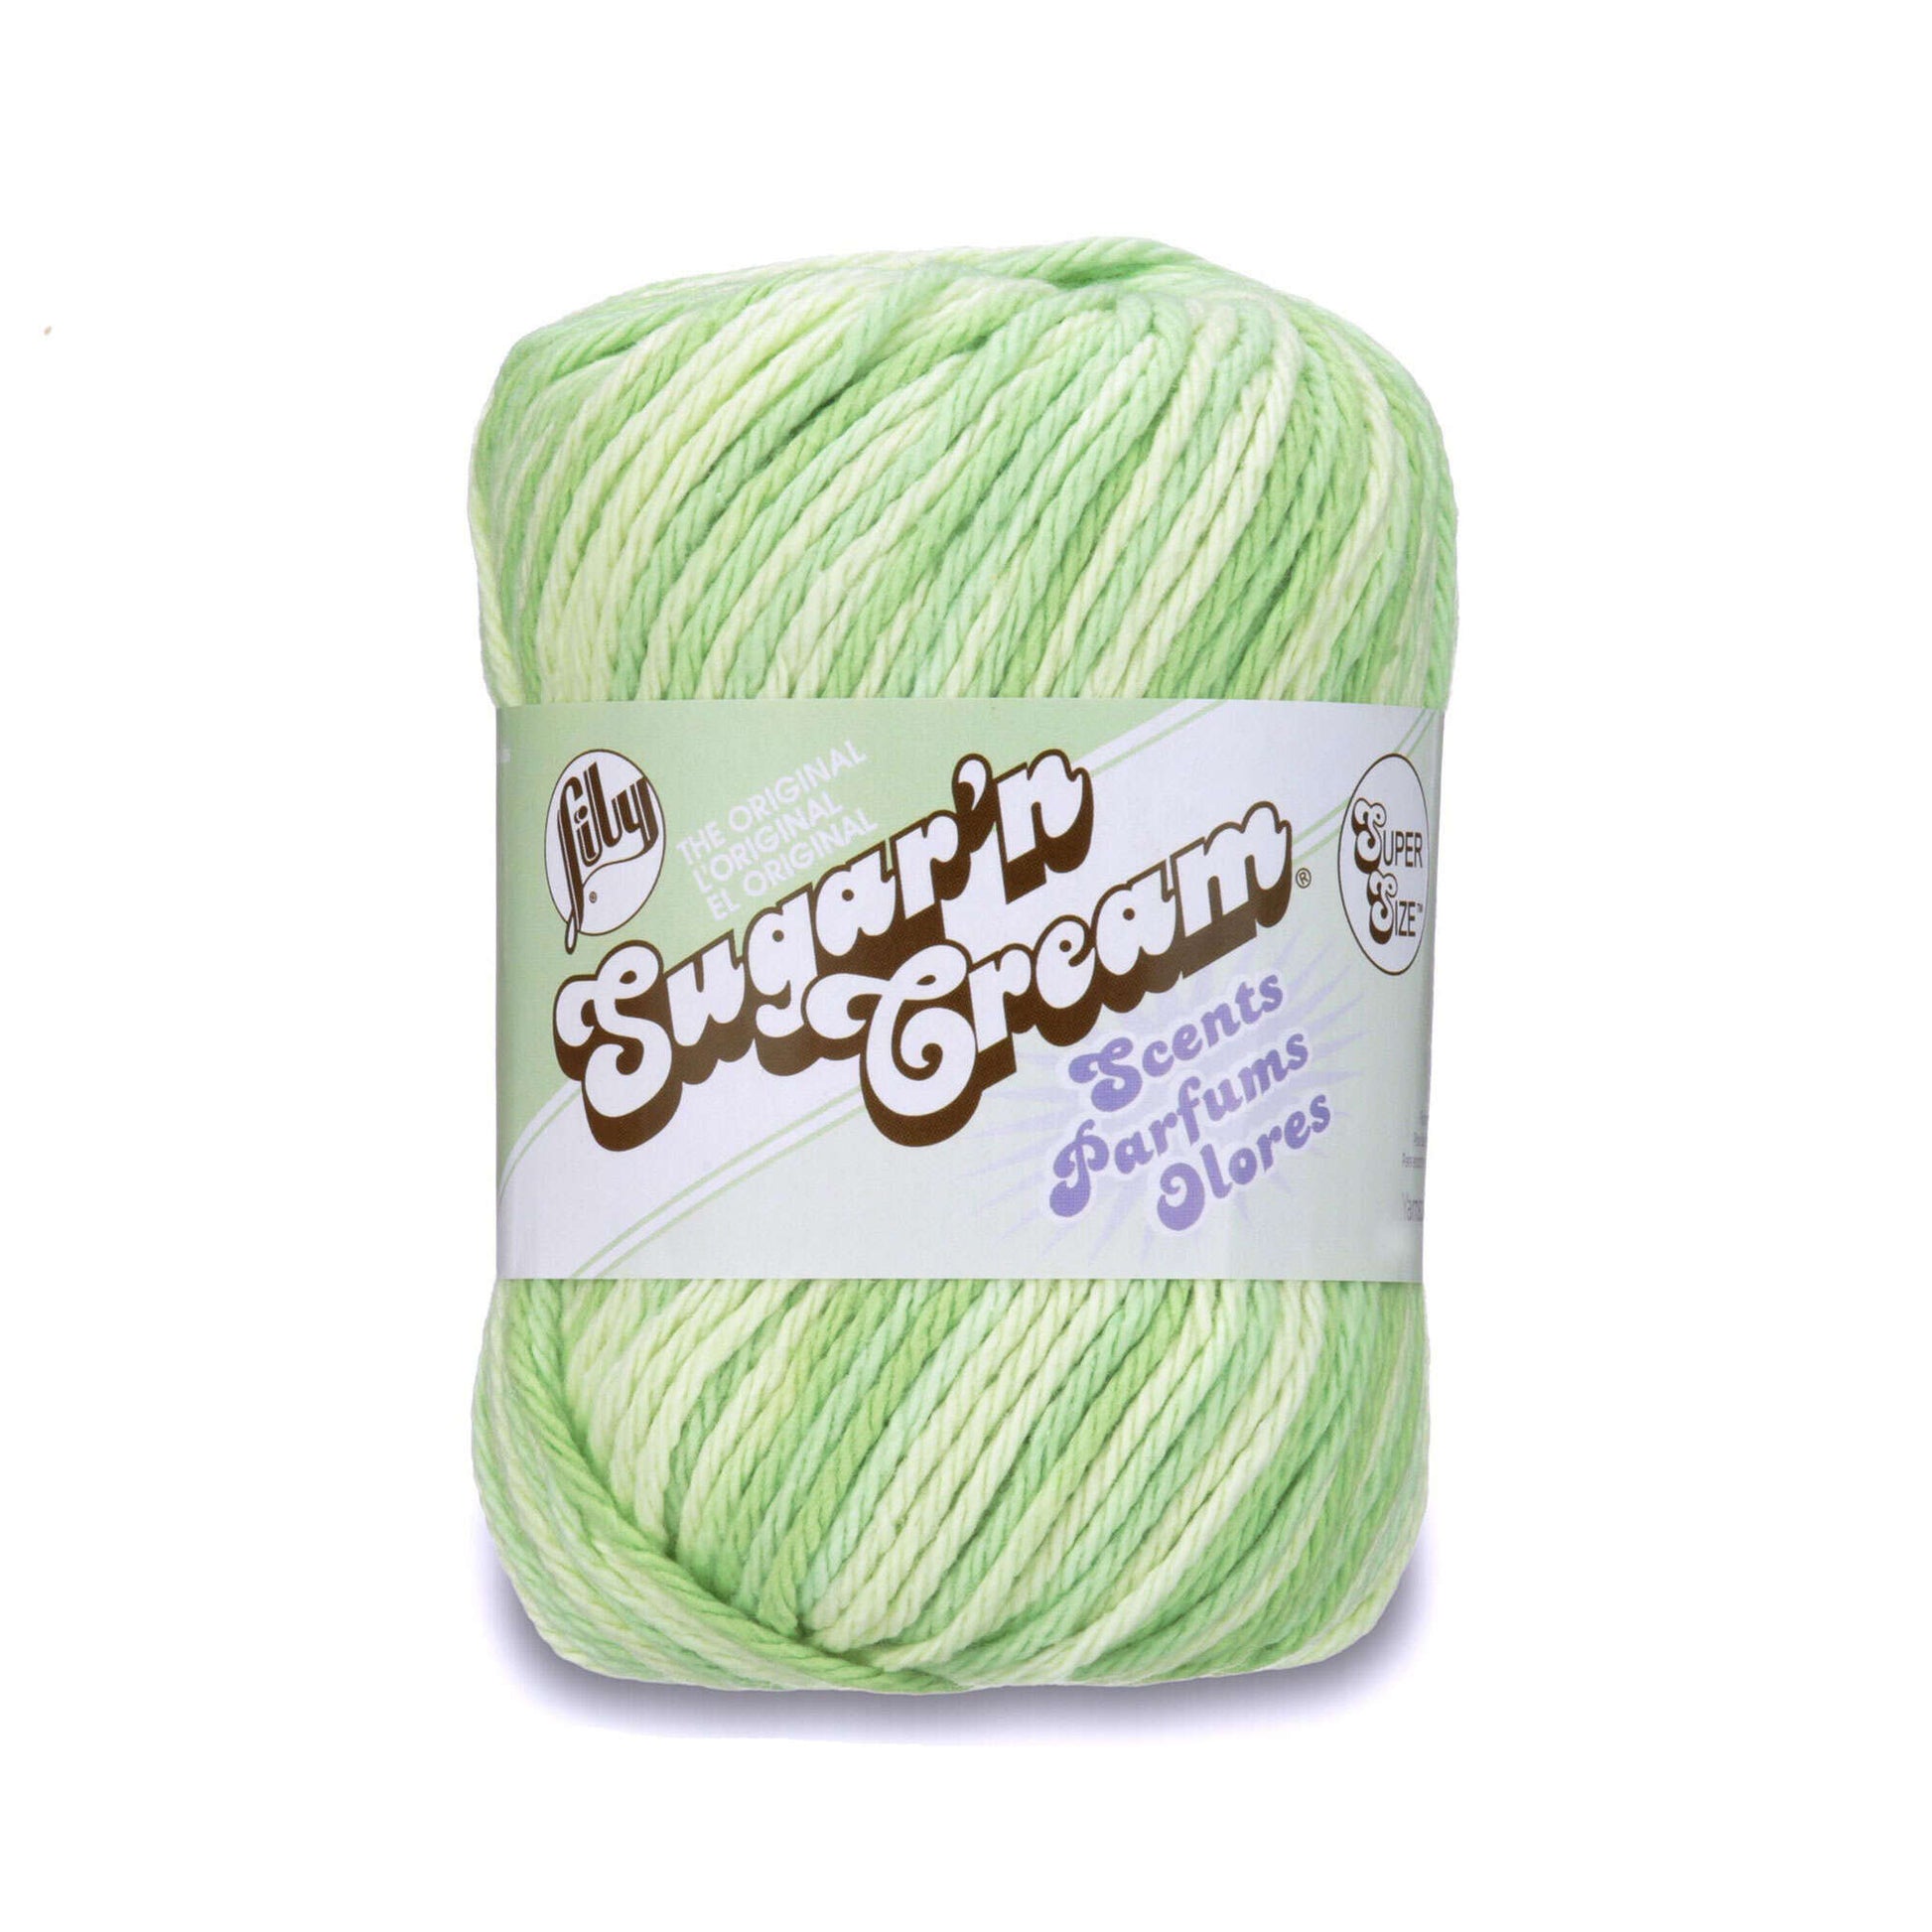 Lily Sugar'n Cream Super Size Scents Yarn - Clearance Shades